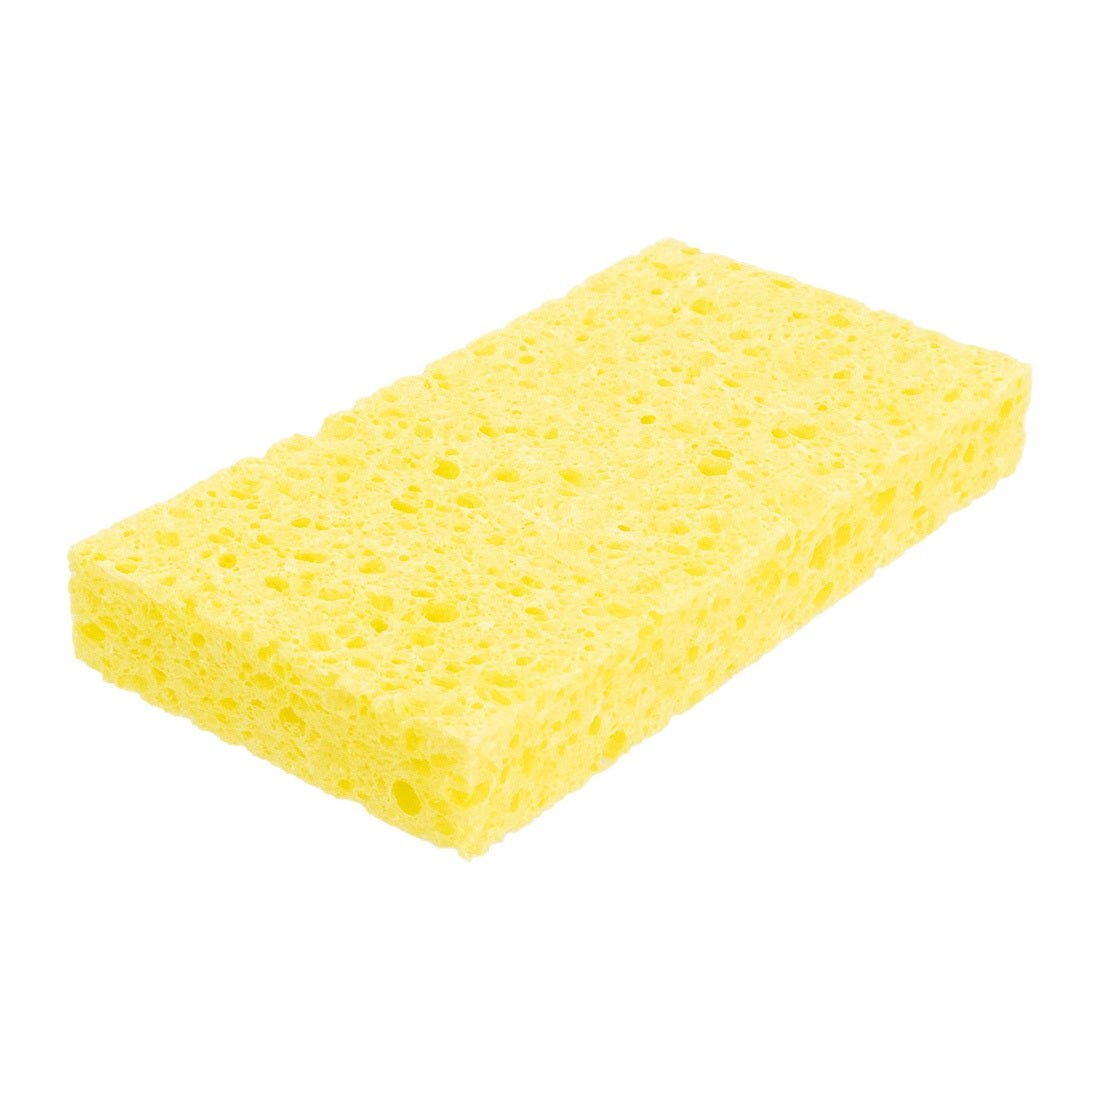 World Enterprises Cellulose Sponge, Window Cleaning